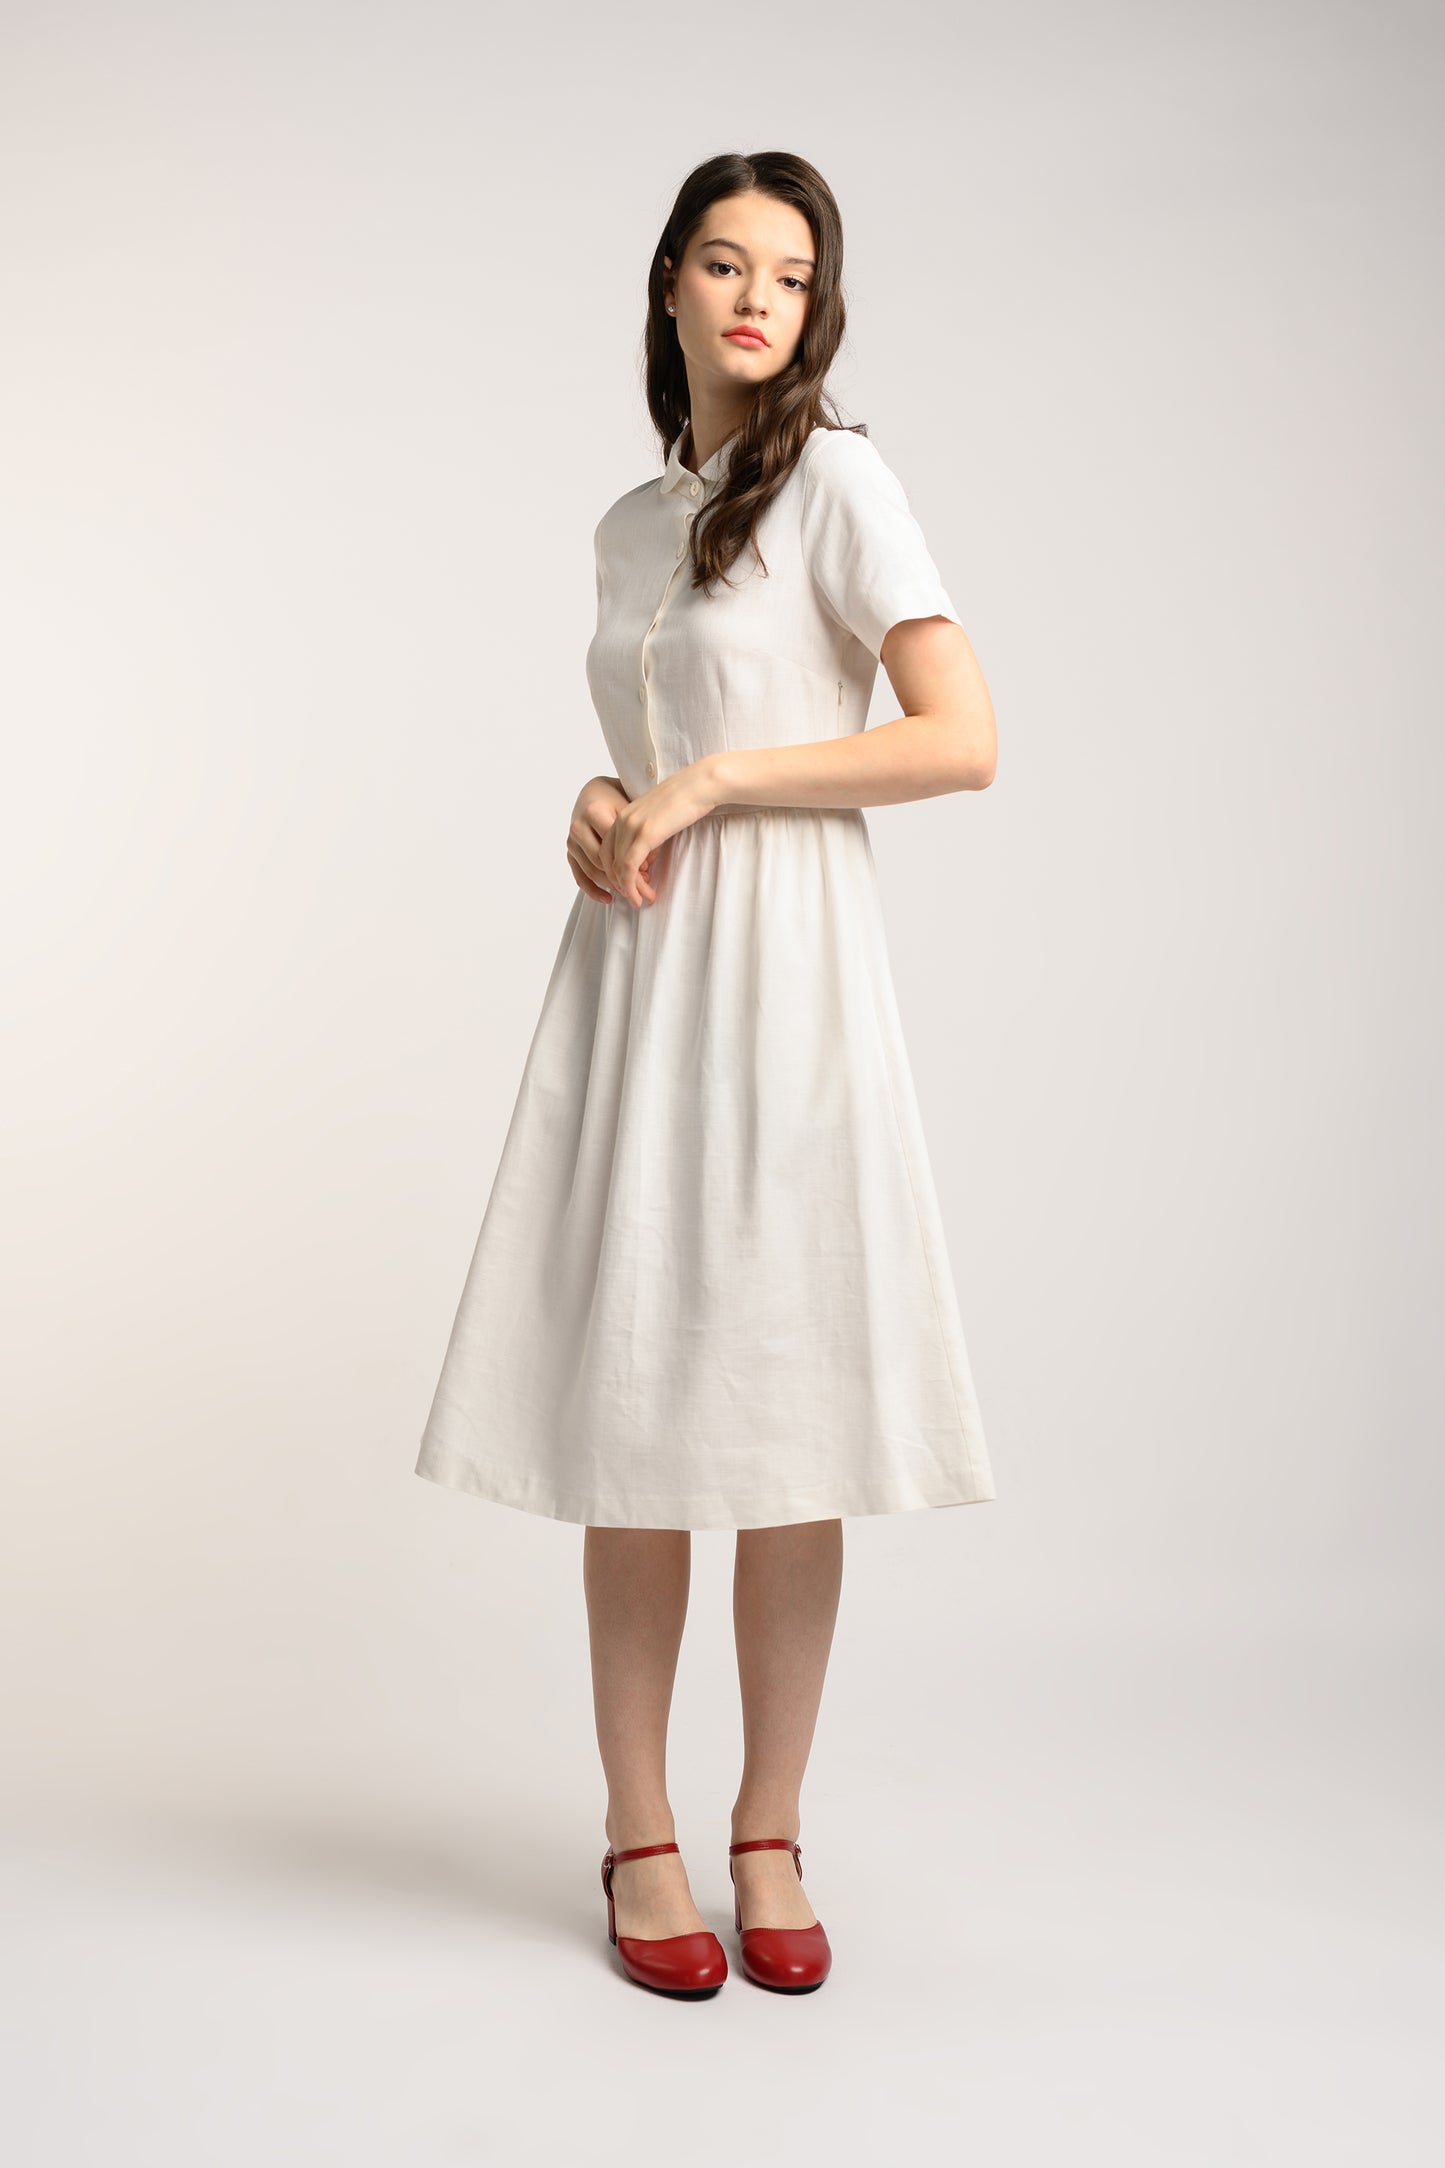 Collared Linen Dress - White